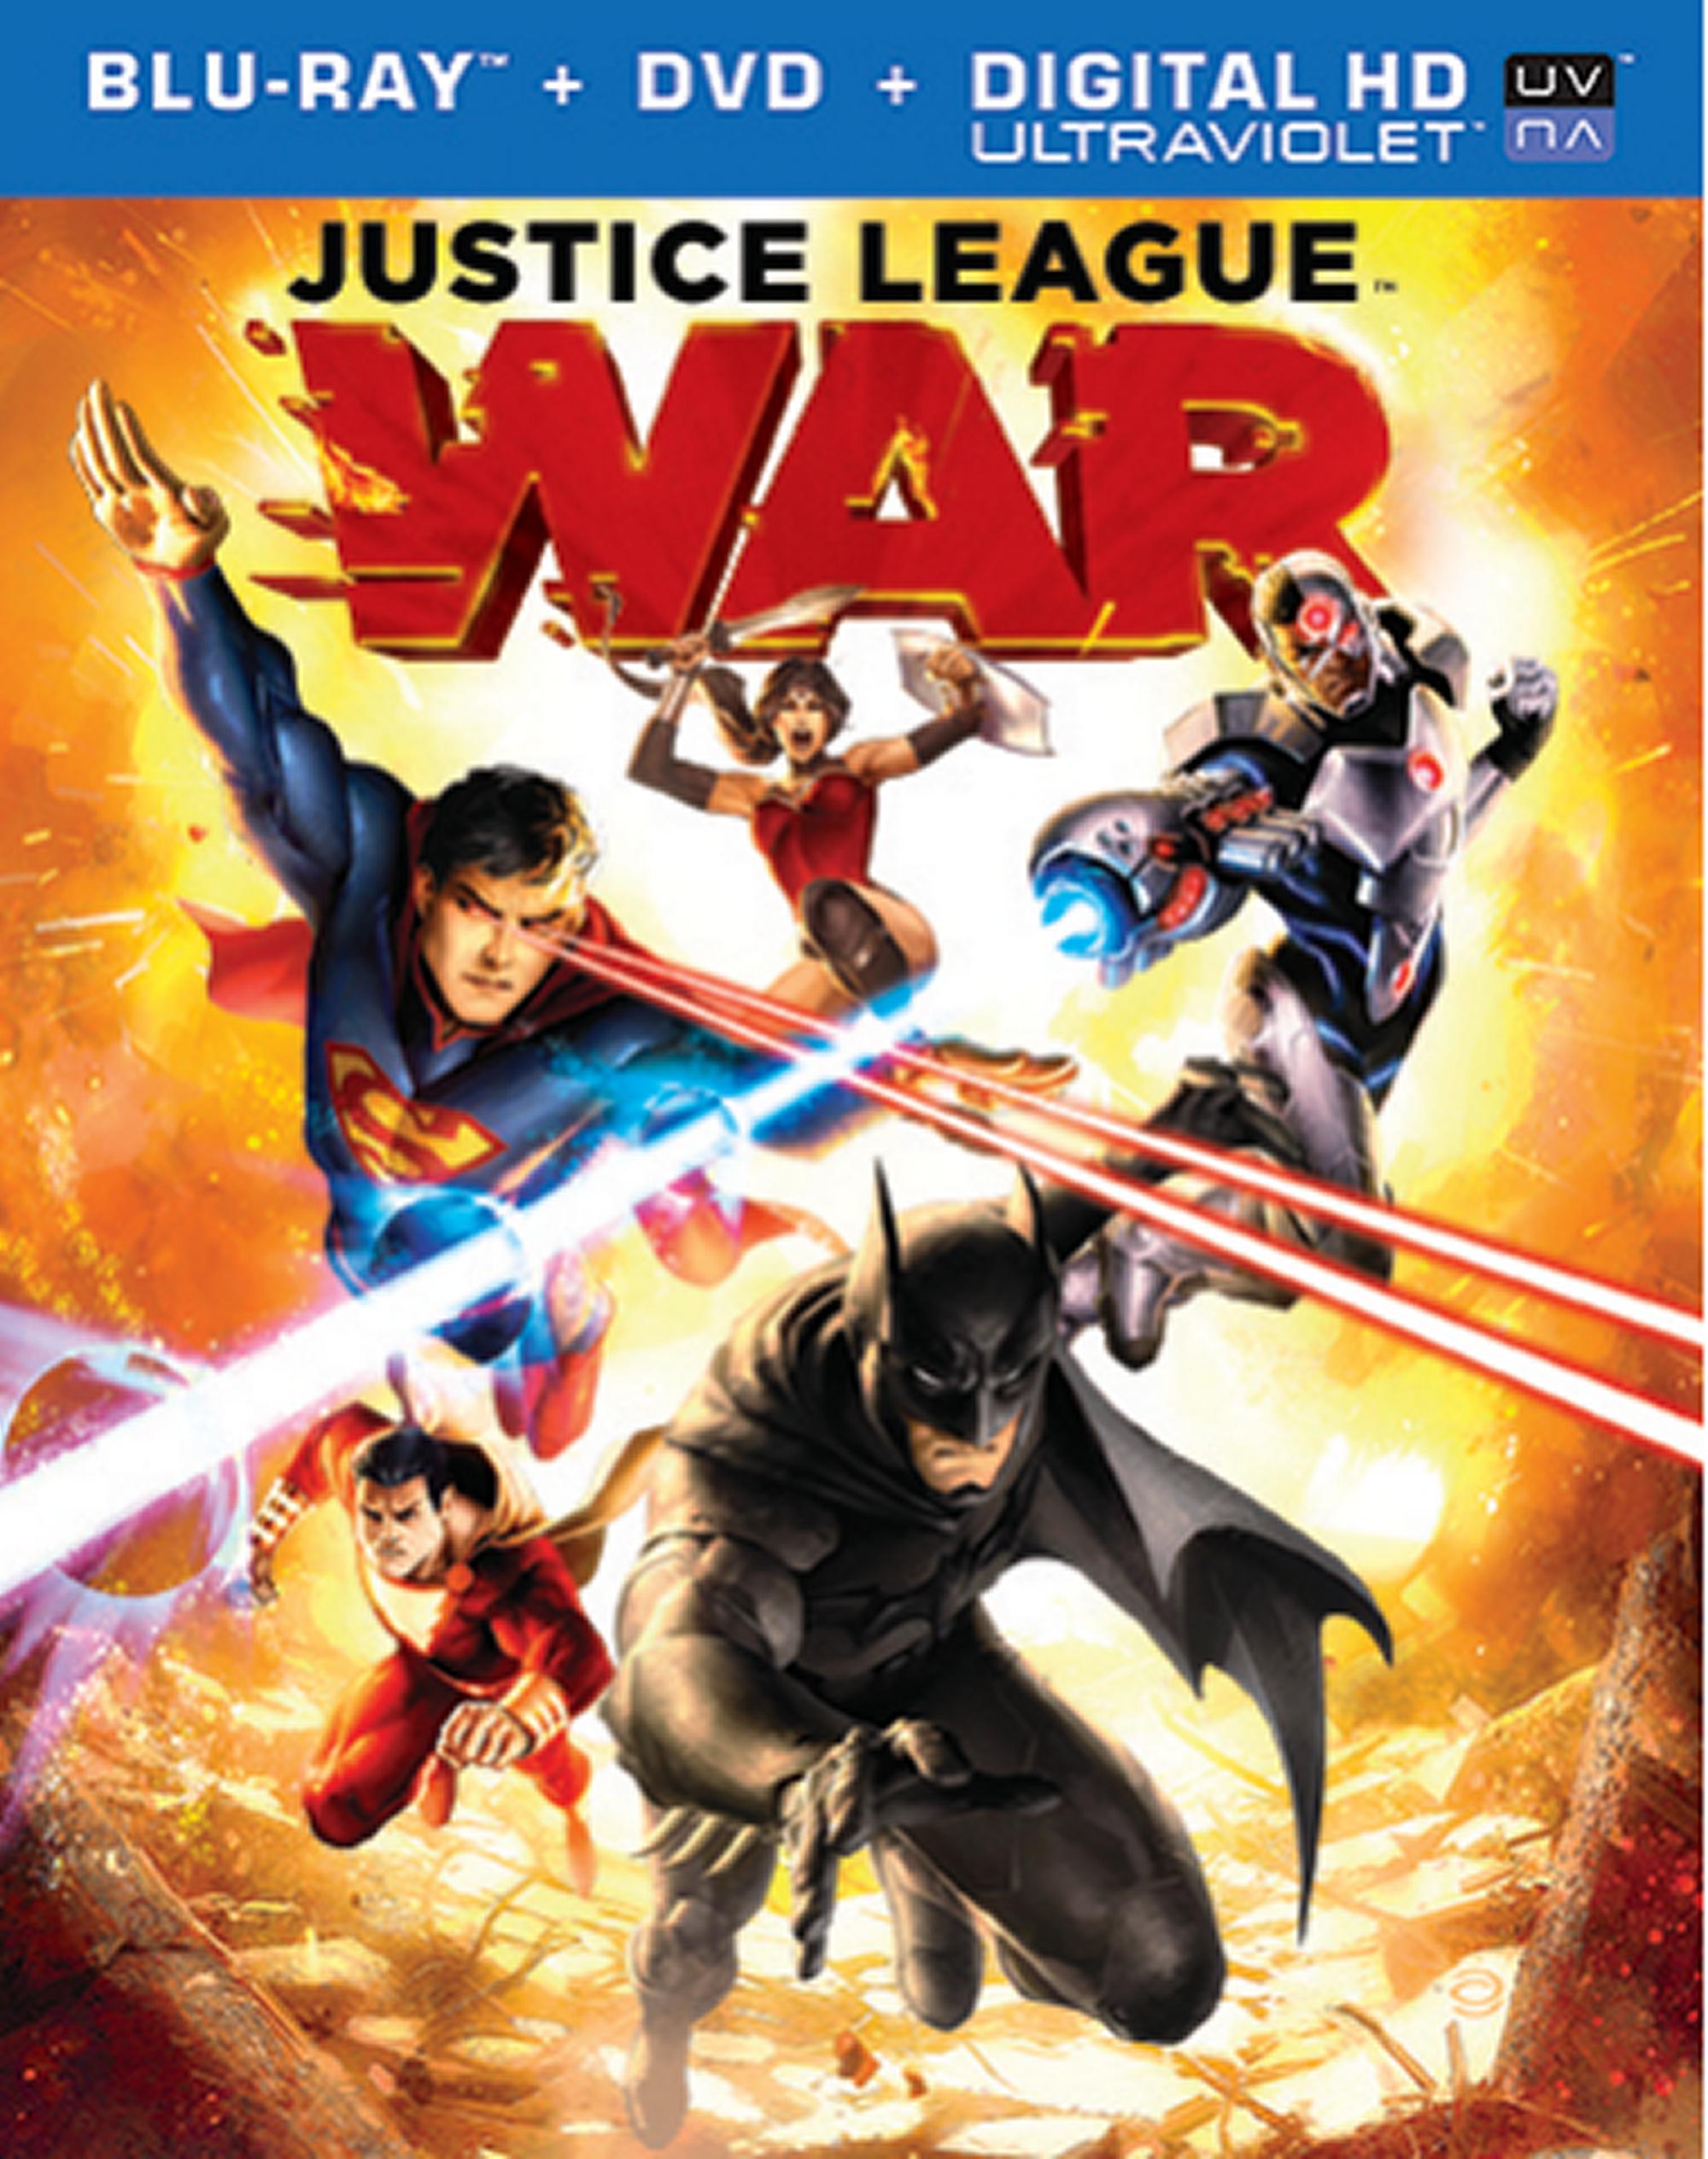 The Aisle Seat - Justice League: War